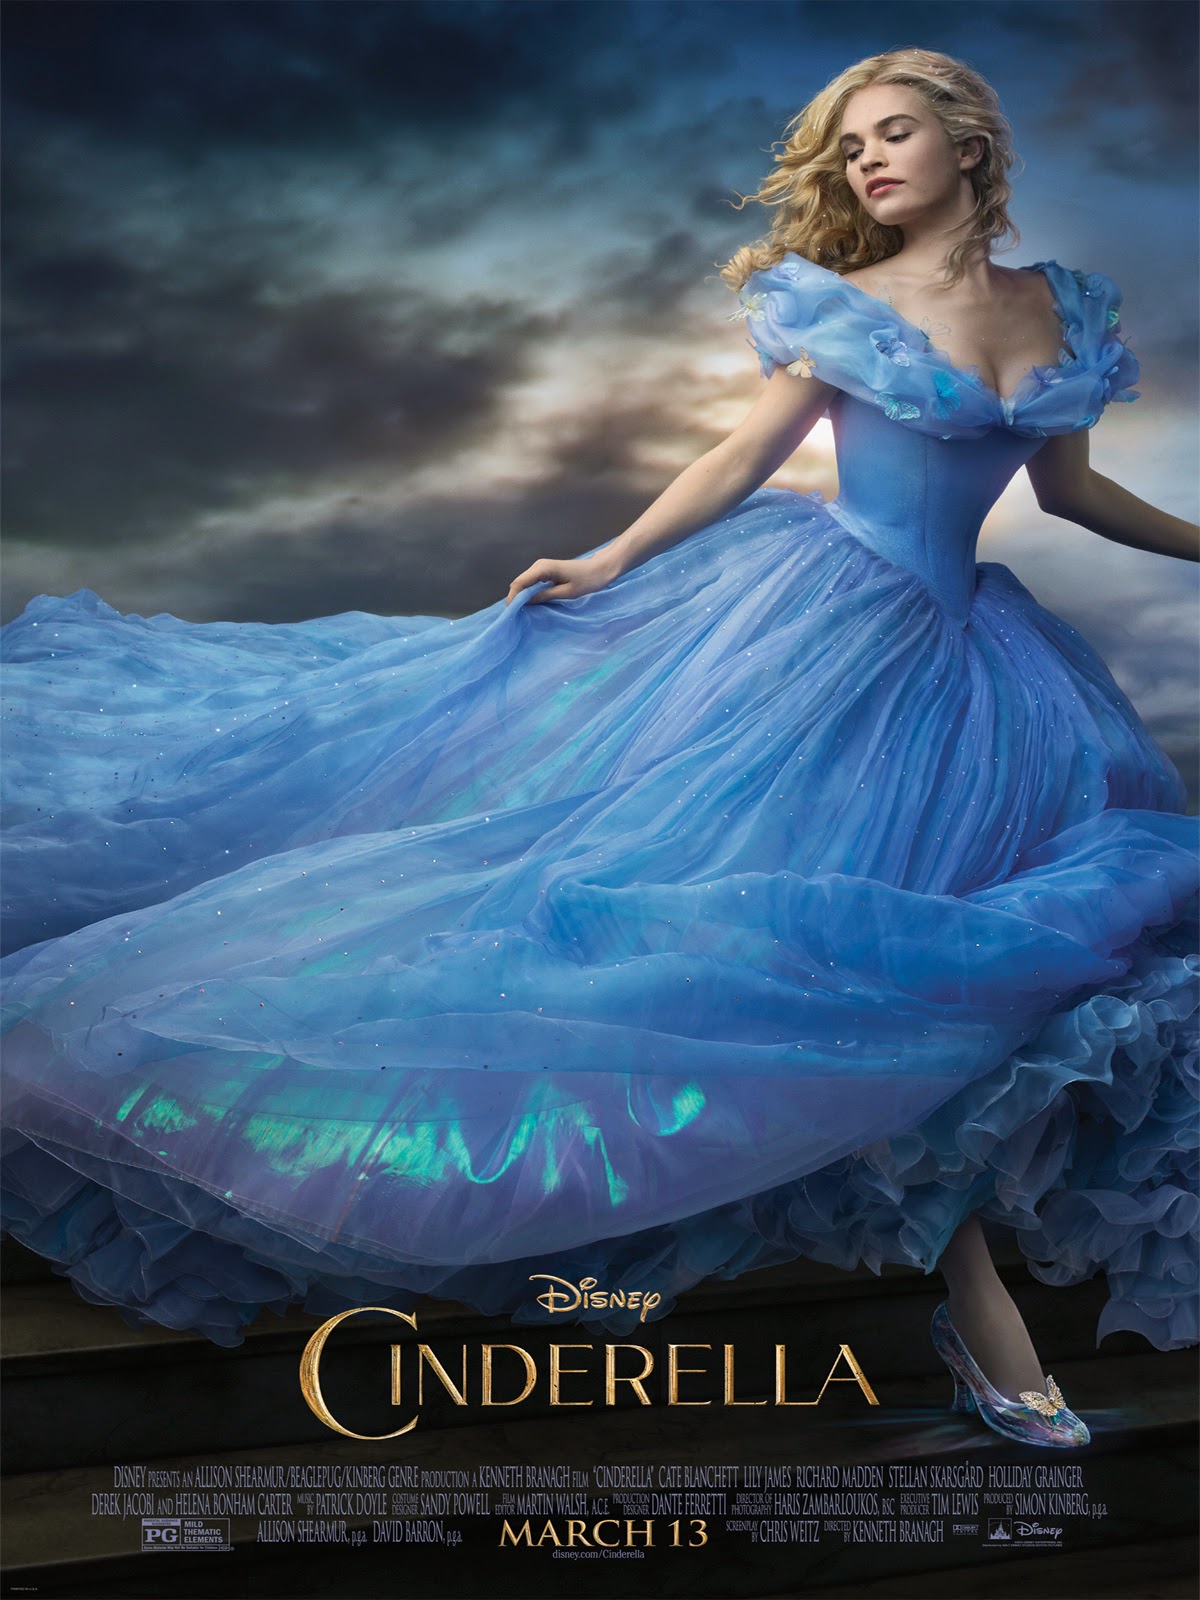 essence trend edition Cinderella Disney